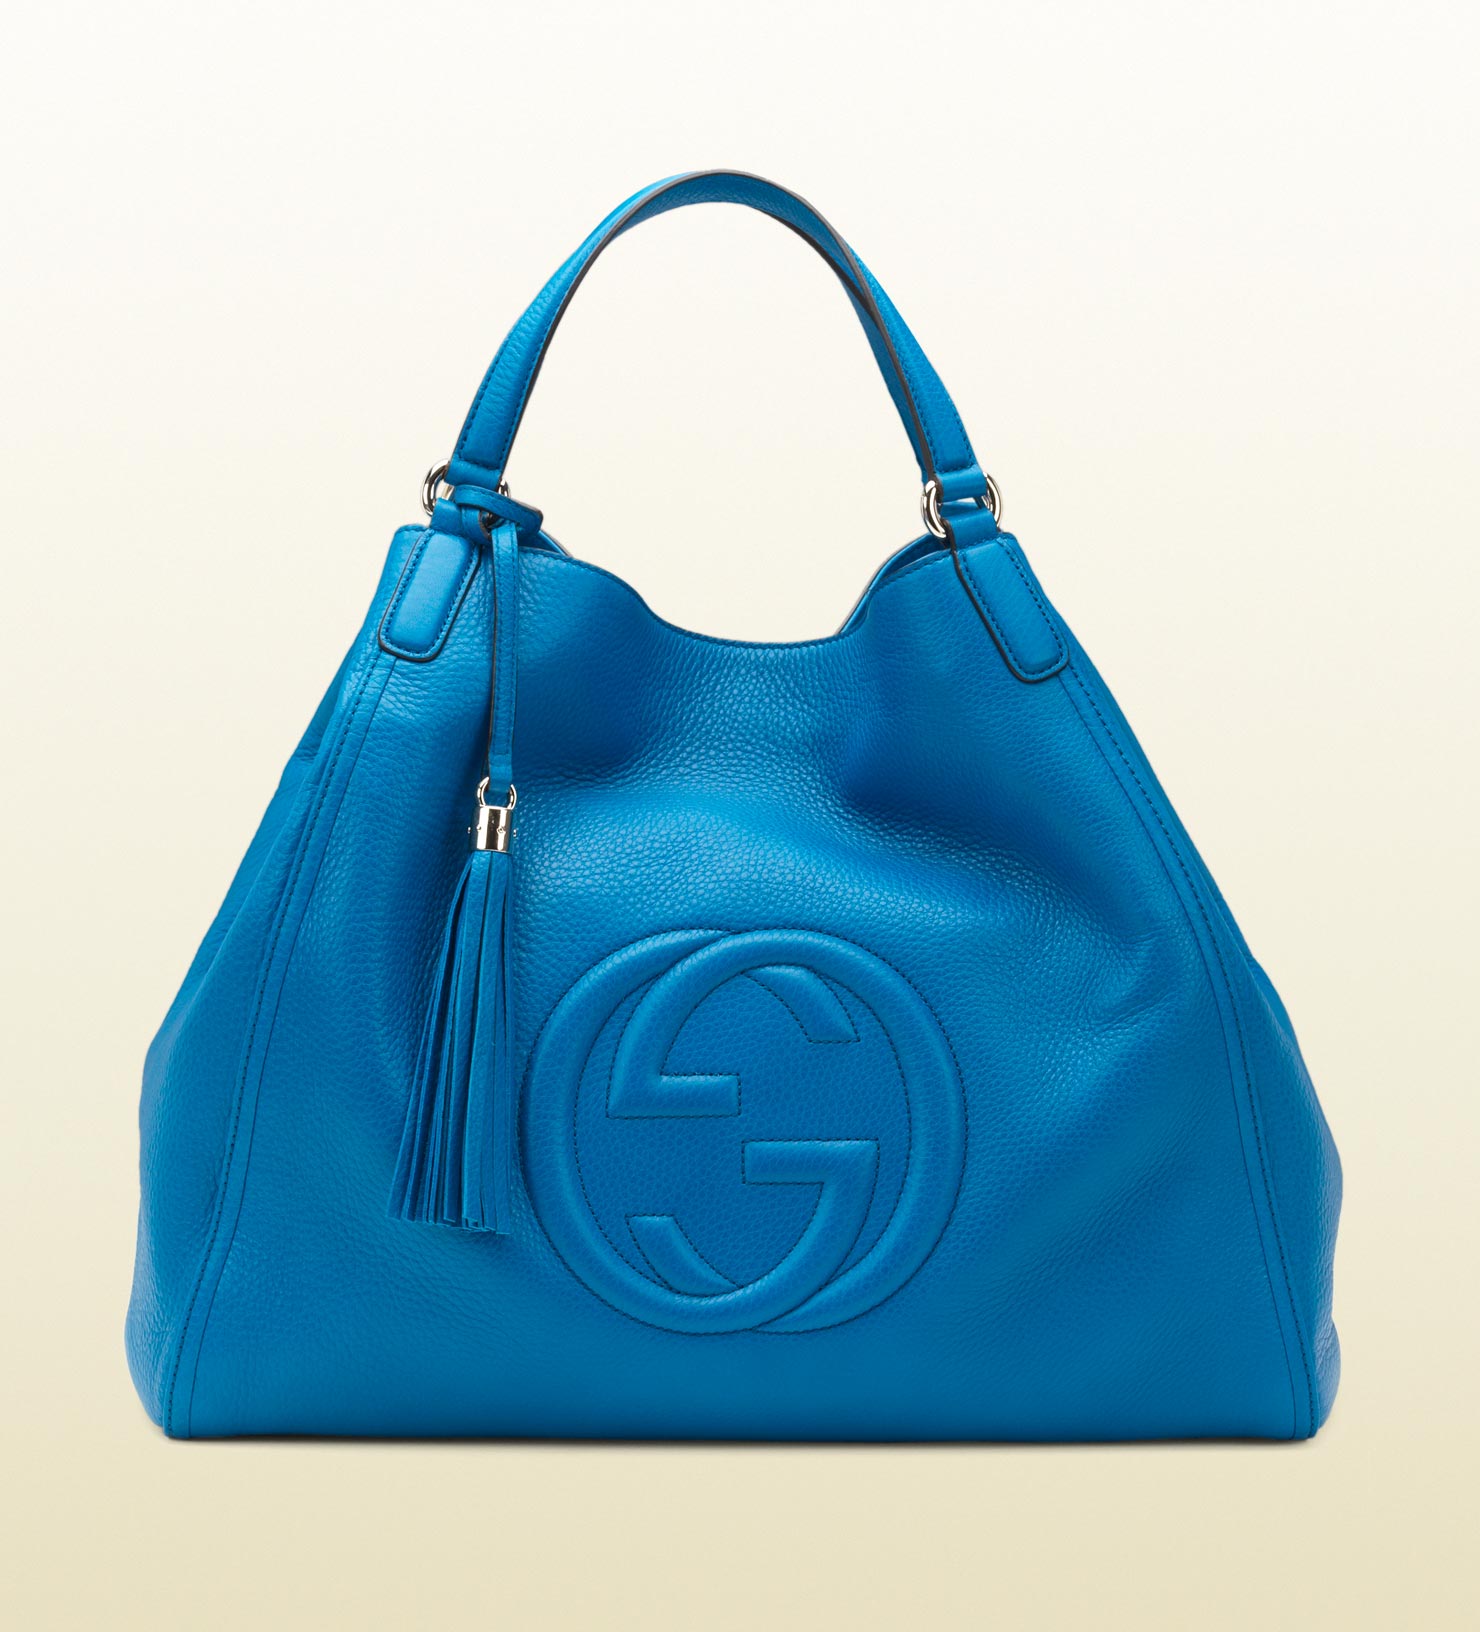 Gucci Soho Riviera Blue Colour Leather Shoulder Bag - Lyst